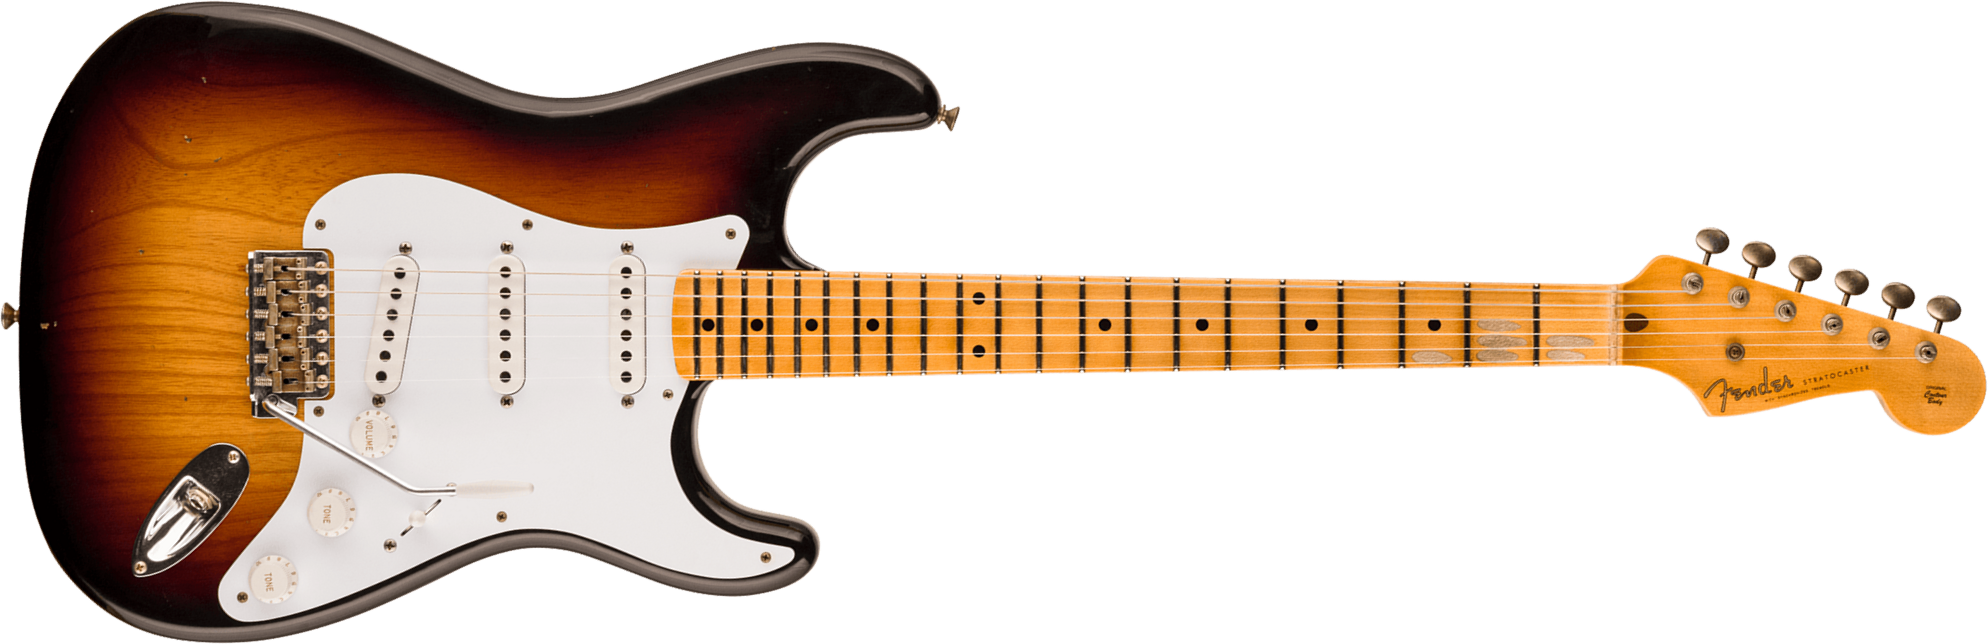 Fender Custom Shop Strat 1954 70th Anniv. 3s Trem Mn - Journeyman Relic Wide-fade 2-color Sunburst - Elektrische gitaar in Str-vorm - Main picture